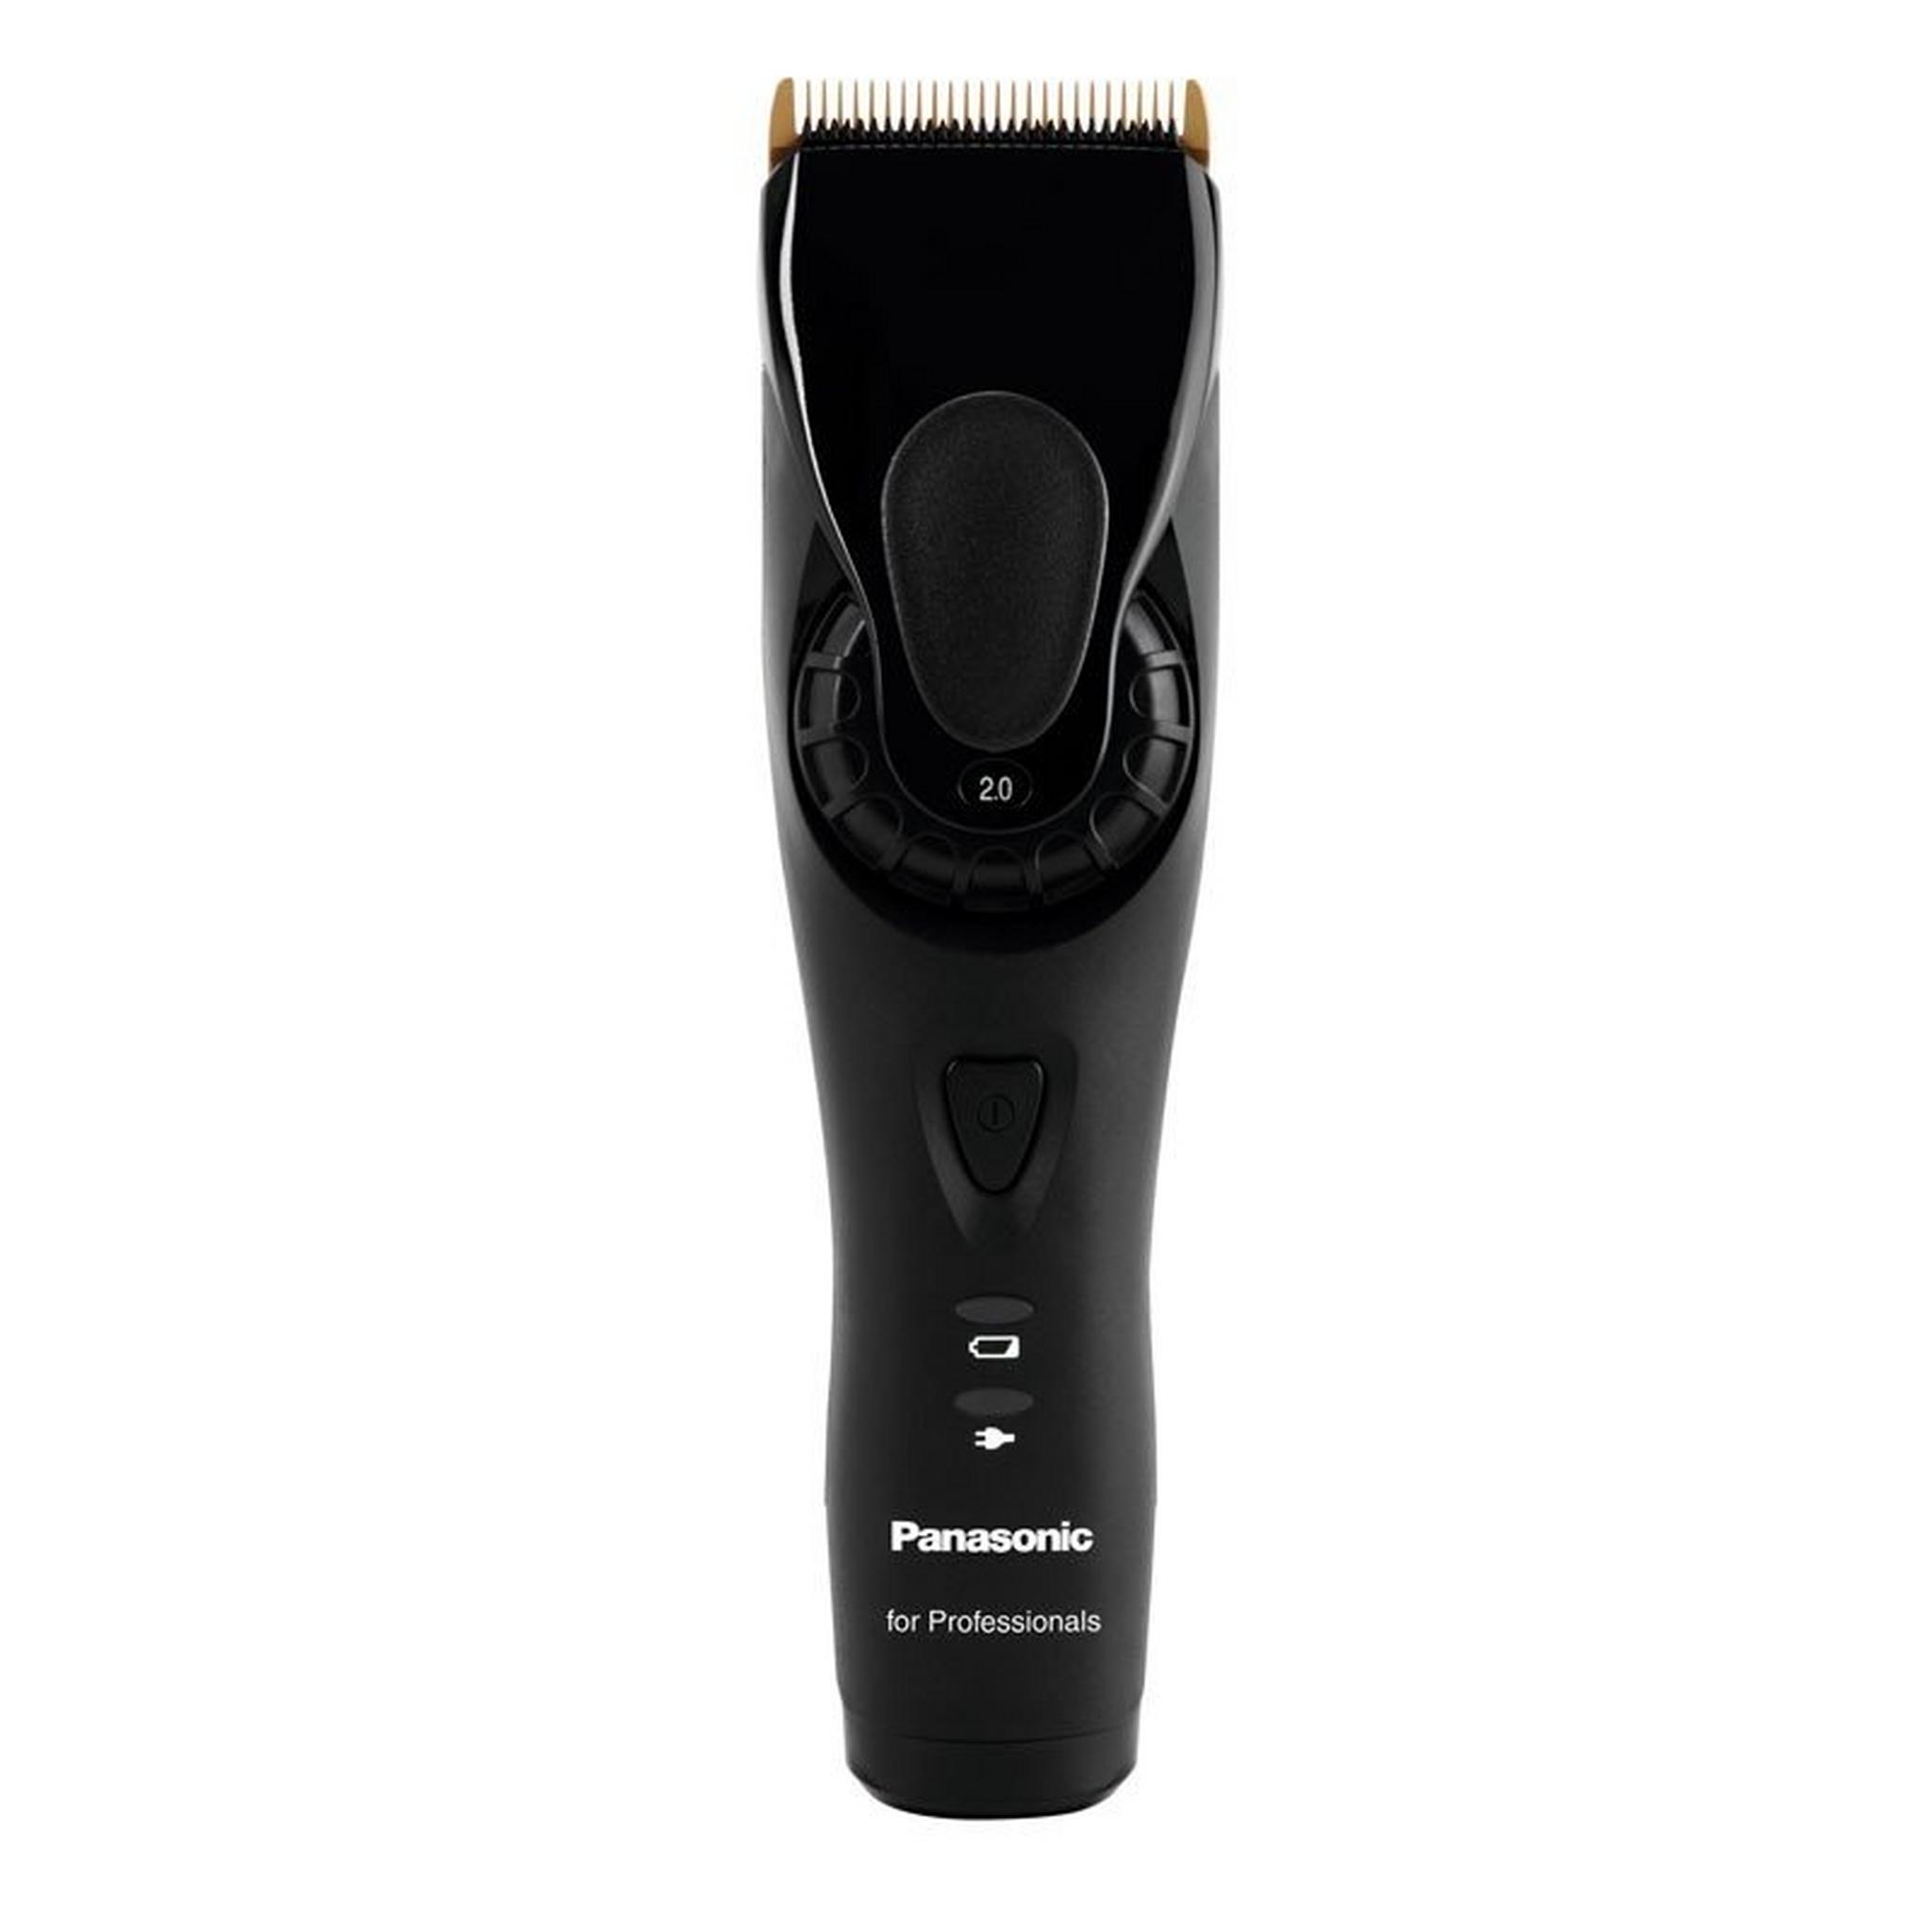 Panasonic ER-GP80-K722 Professional Hair Trimmer